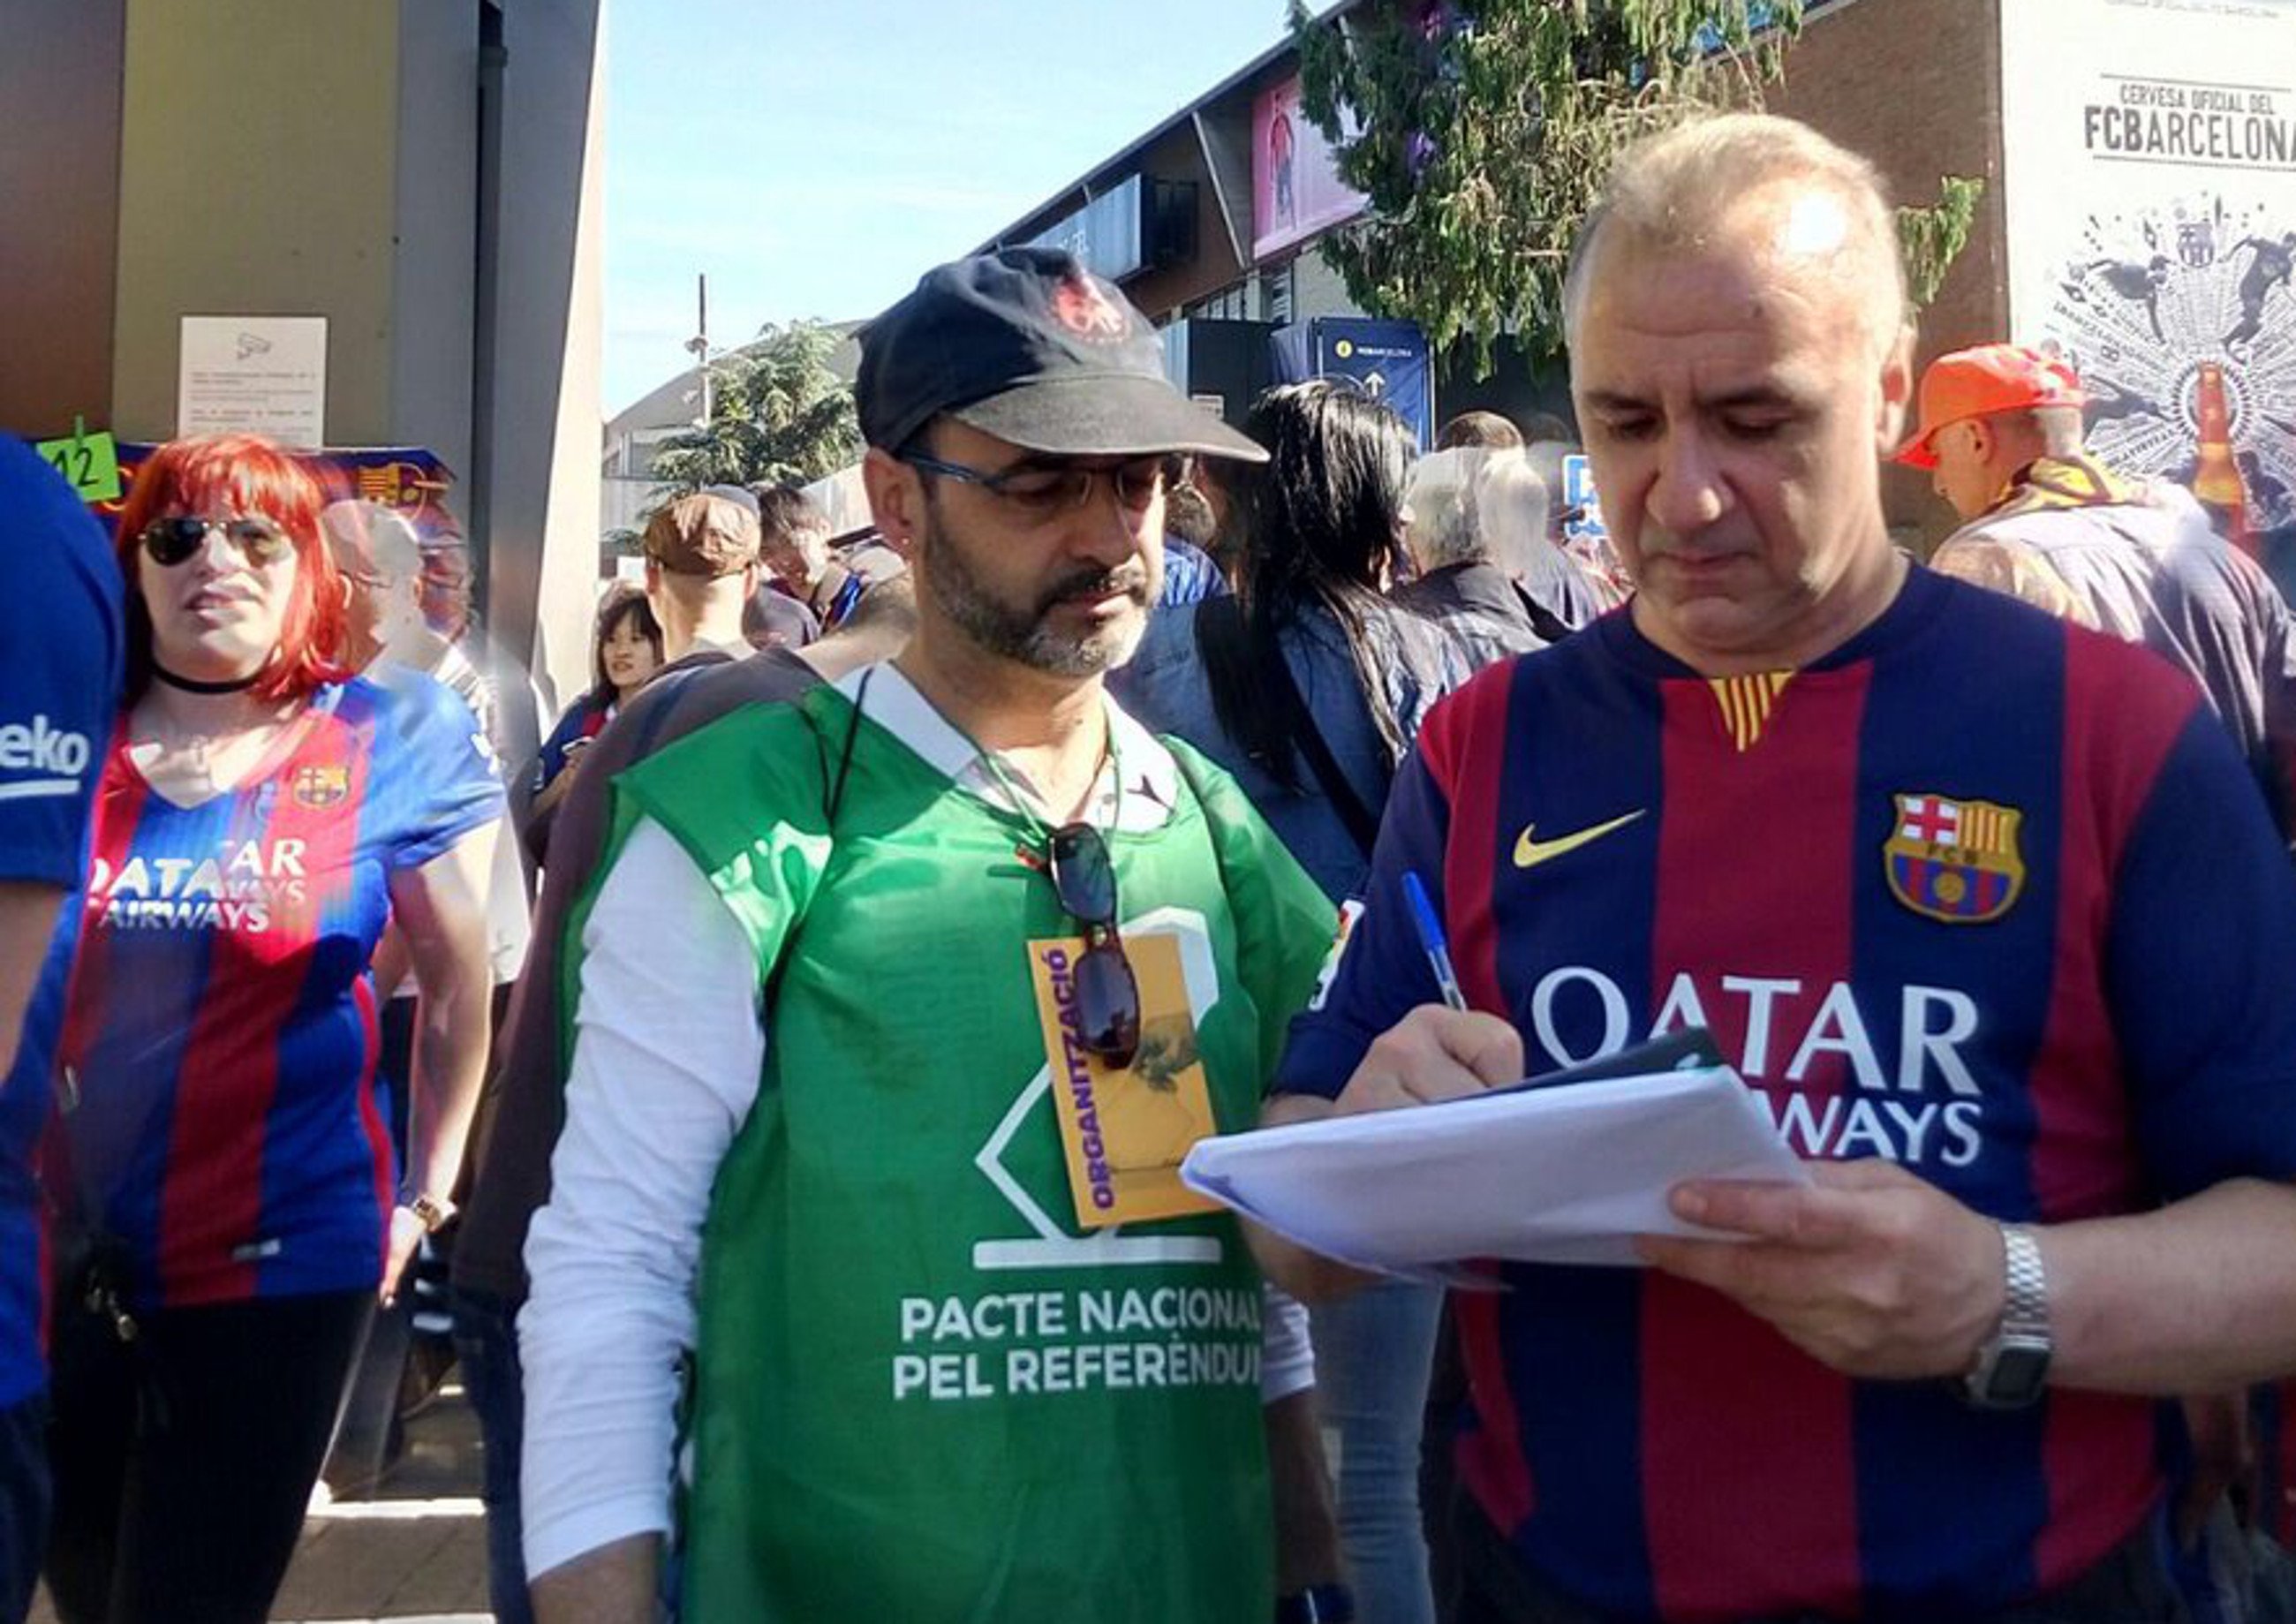 La recogida de firmas para el referéndum sigue en el Camp Nou